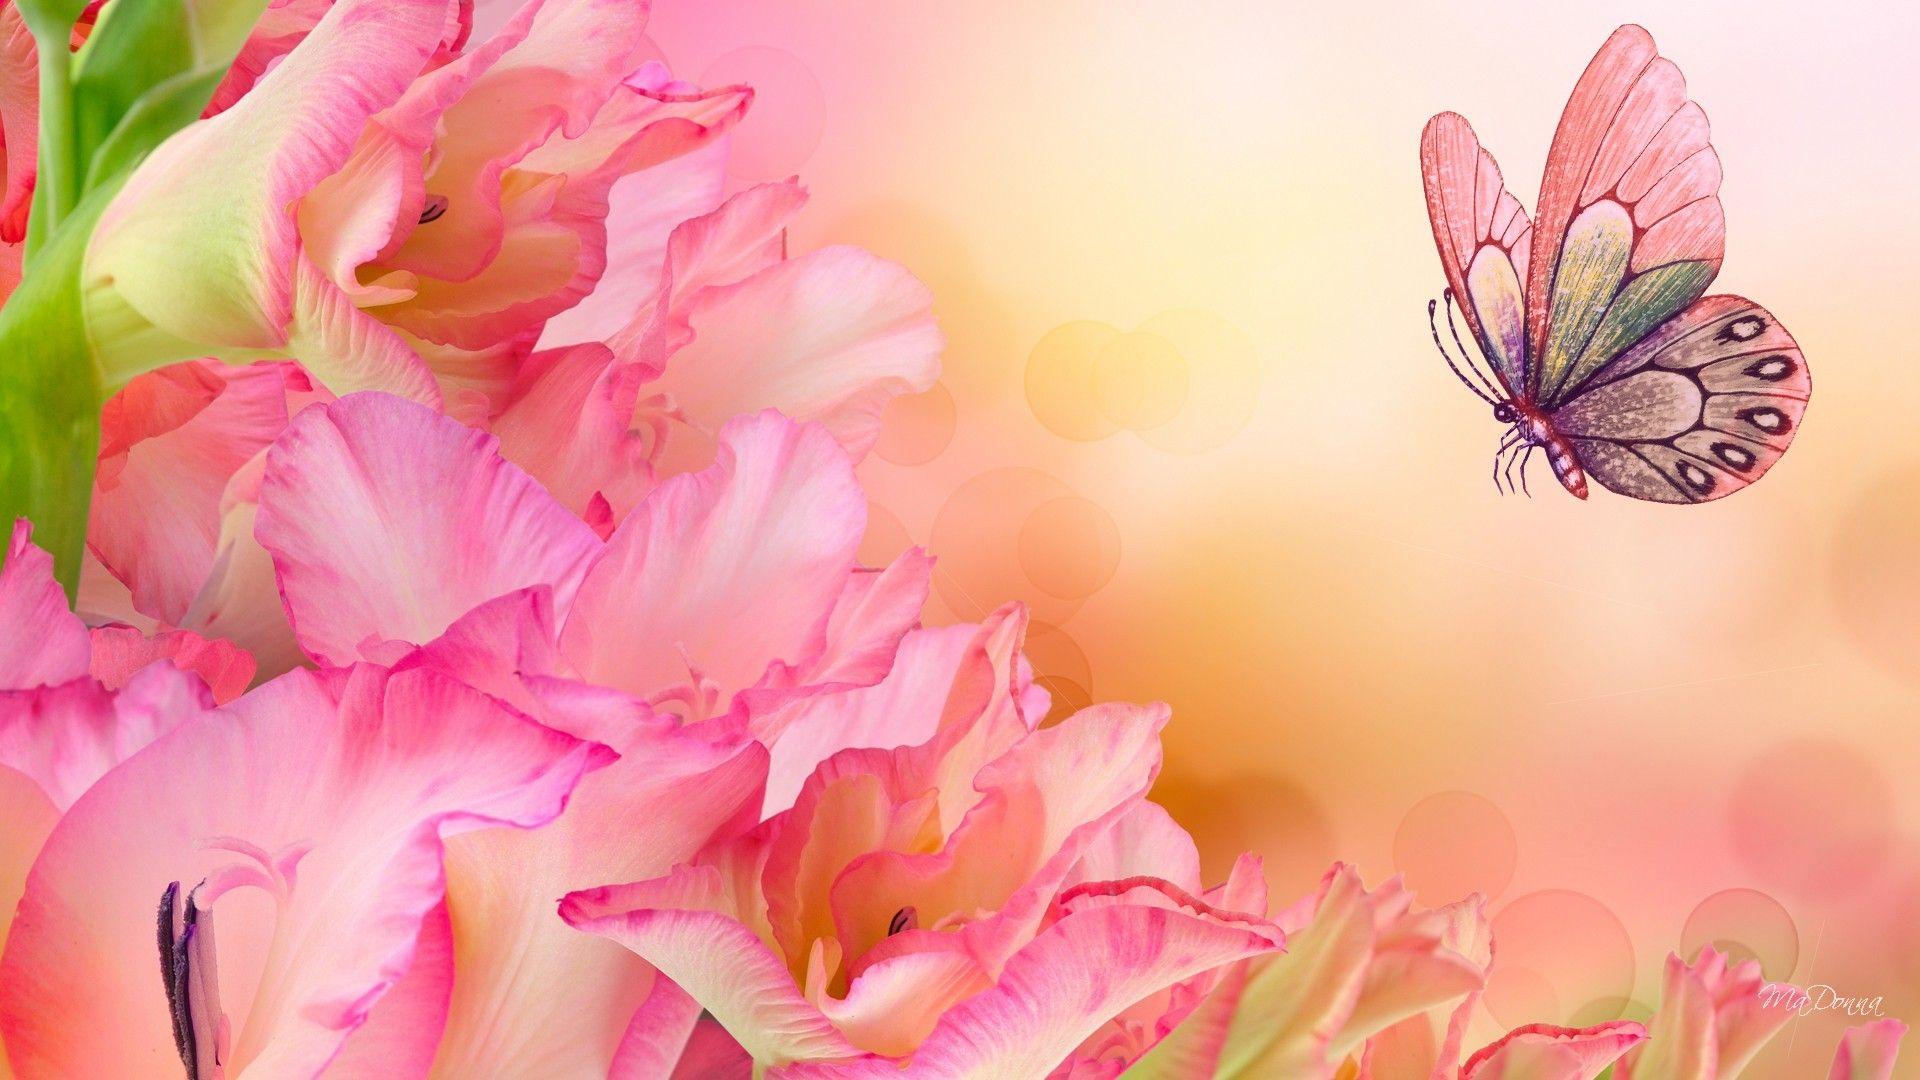 Flower: Butterfly Gladiolas Glads Glow Flowers Pink Summer Spring